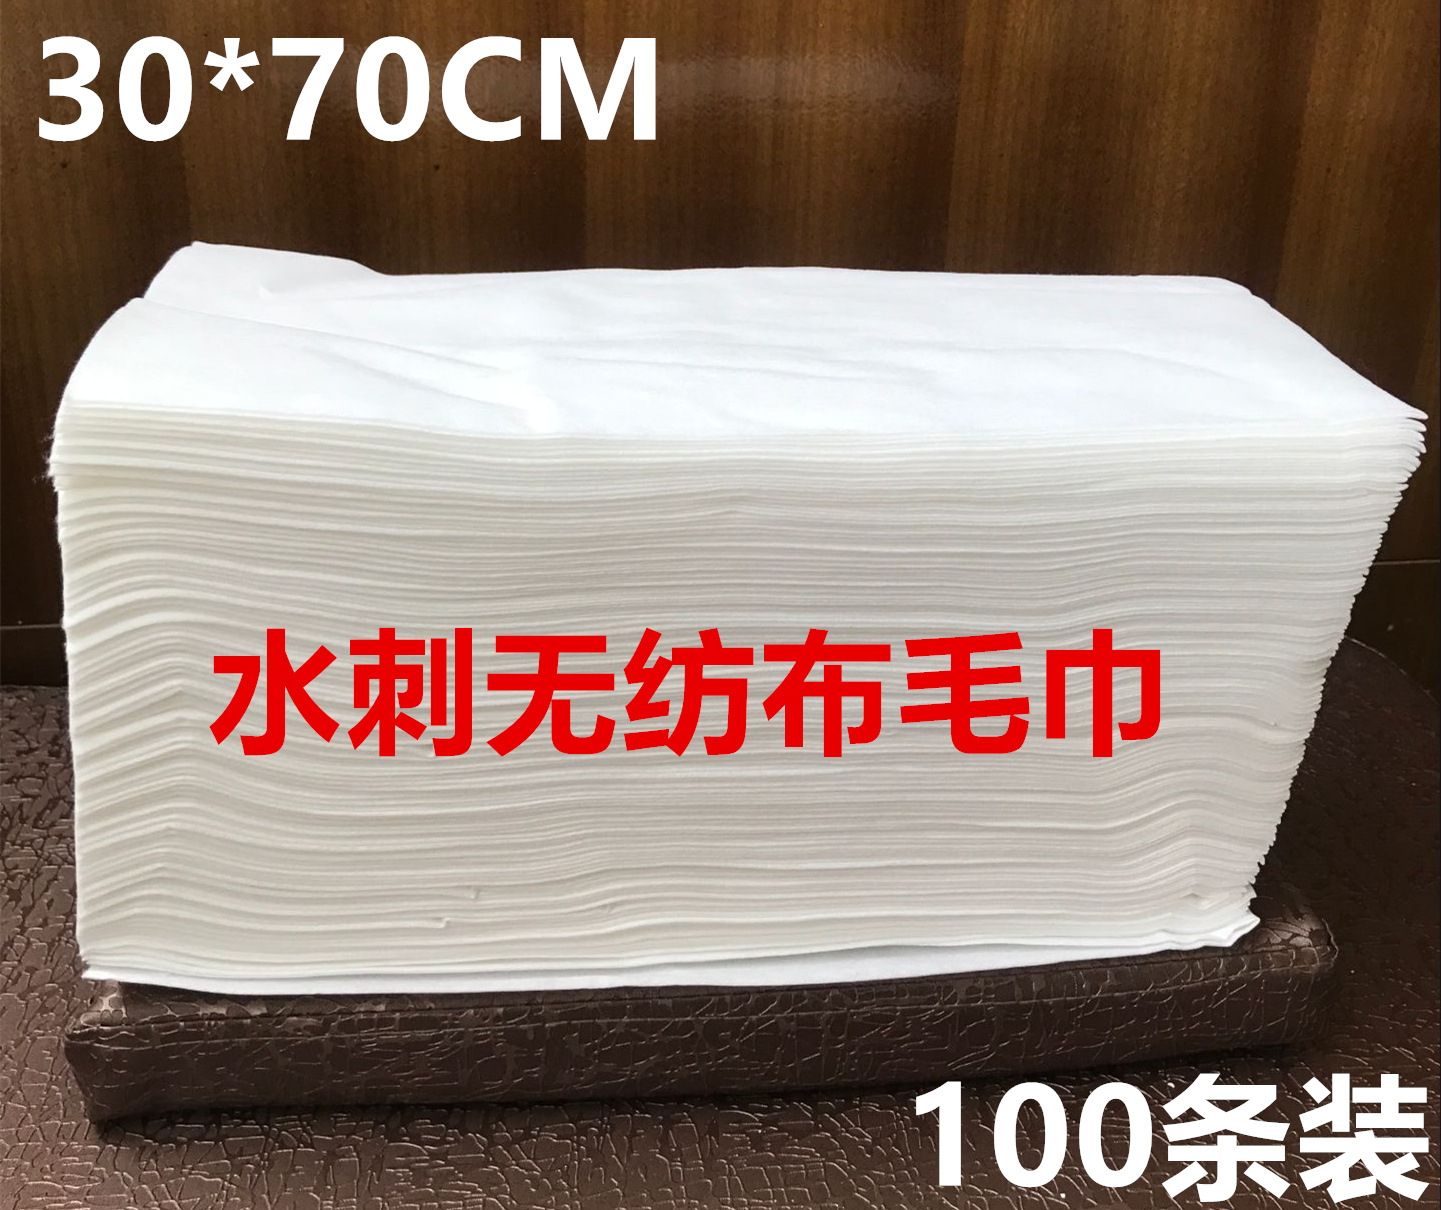 Disposable Towel Foot Bath Foot Towel Rag Towels Travel Pure Cotton Folding Towel 100 Pack